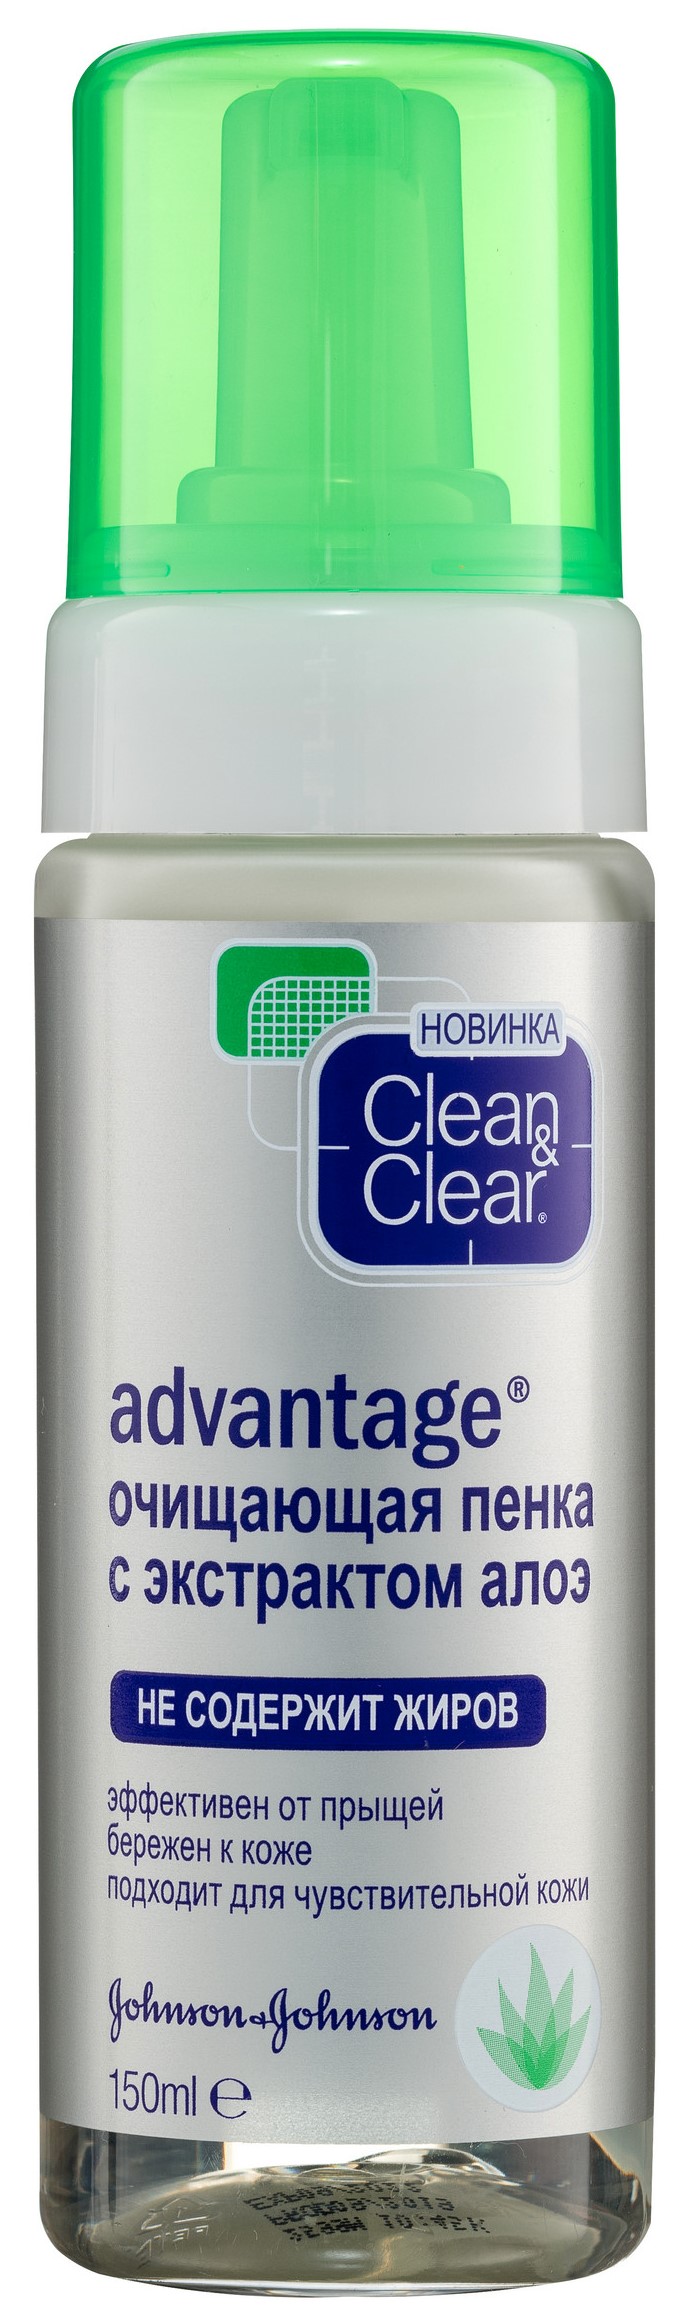 Очищающая пенка с экстрактом алоэ Clean&Clear Advantage 150 мл очищающая пенка clear